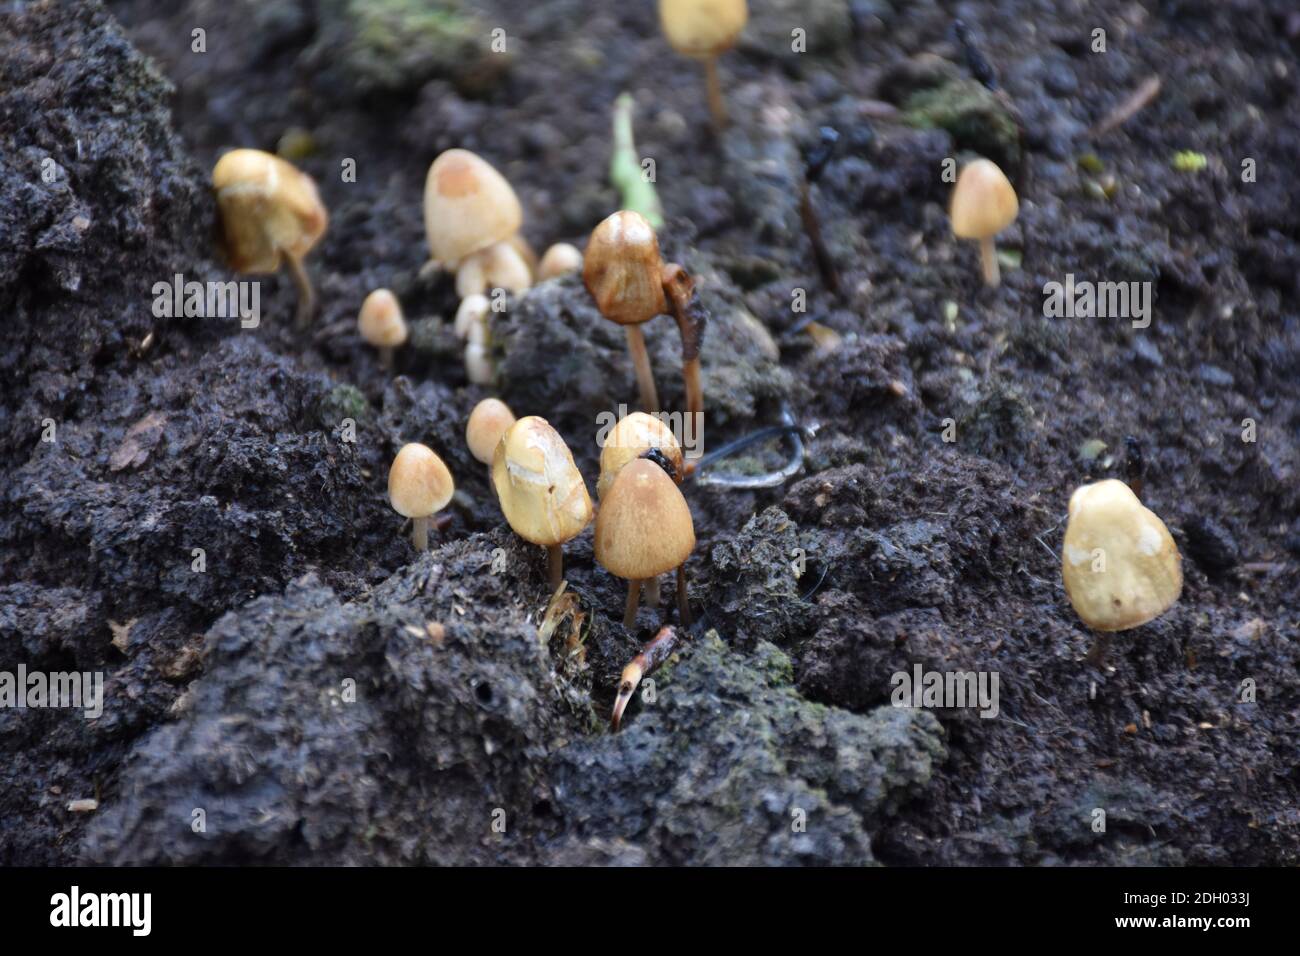 Group of Mongui mushrooms (Psilocybe semilanceata) in manure. Stock Photo